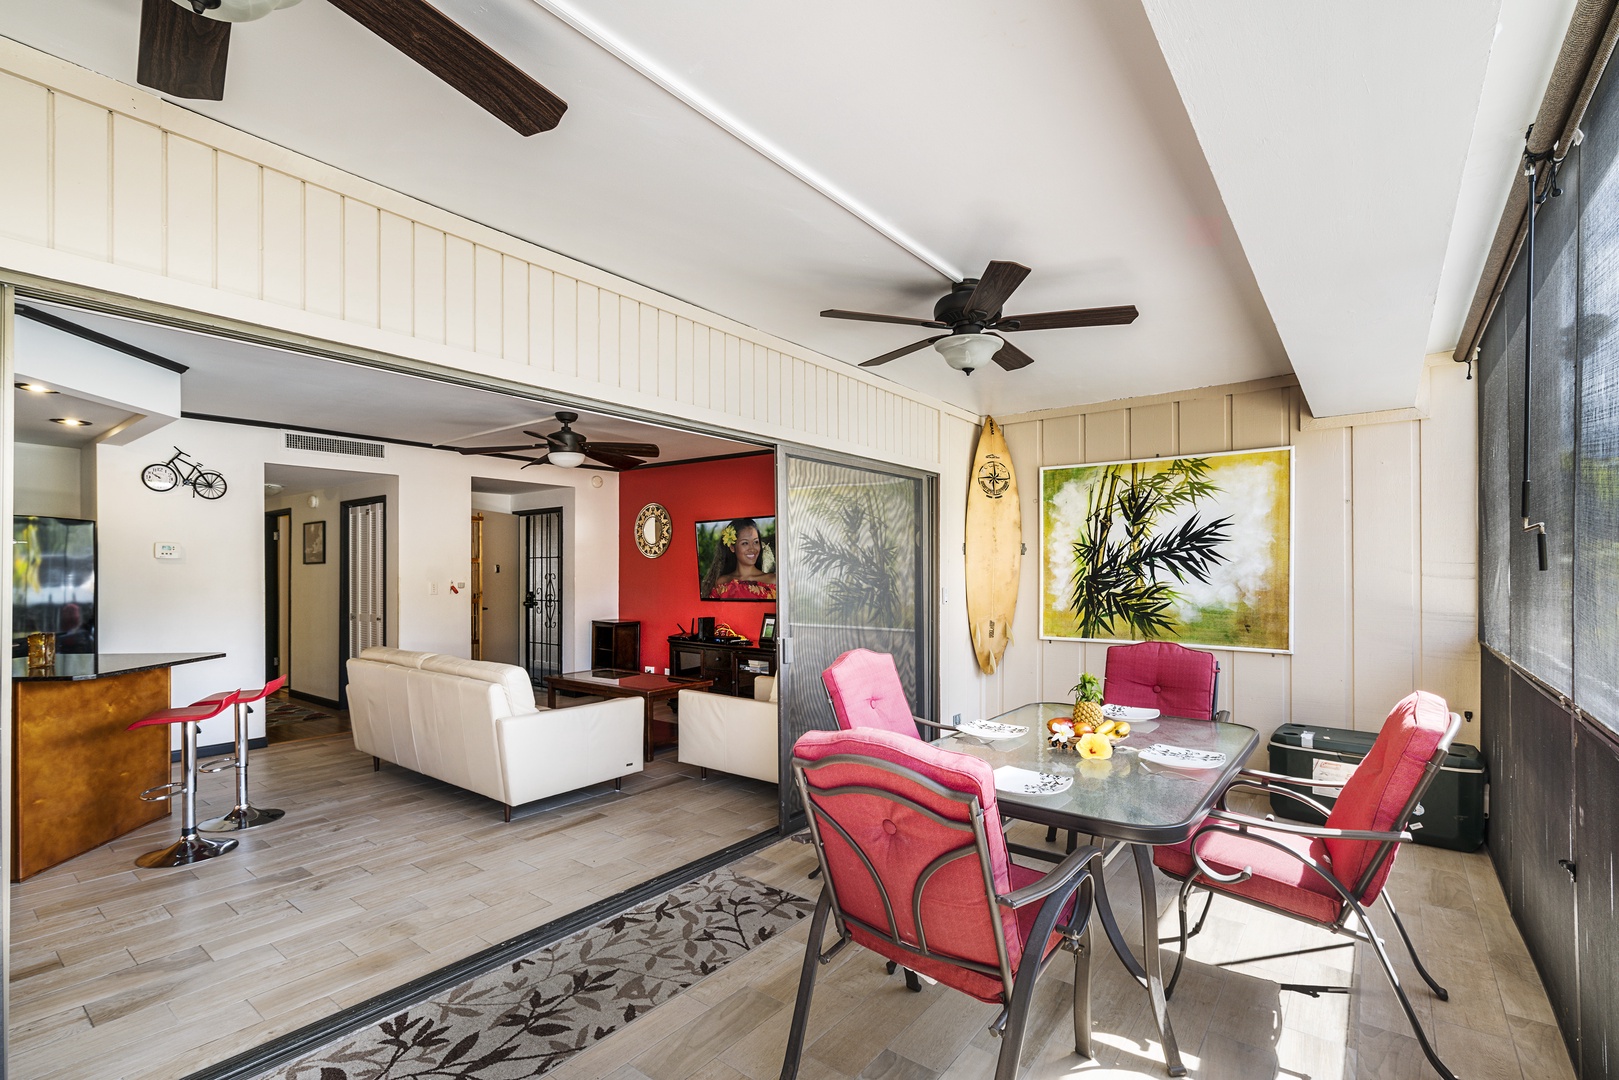 Kailua Kona Vacation Rentals, OFB Kona Plaza 112 - Large sliders make the Lanai feel like an extension of the living room!